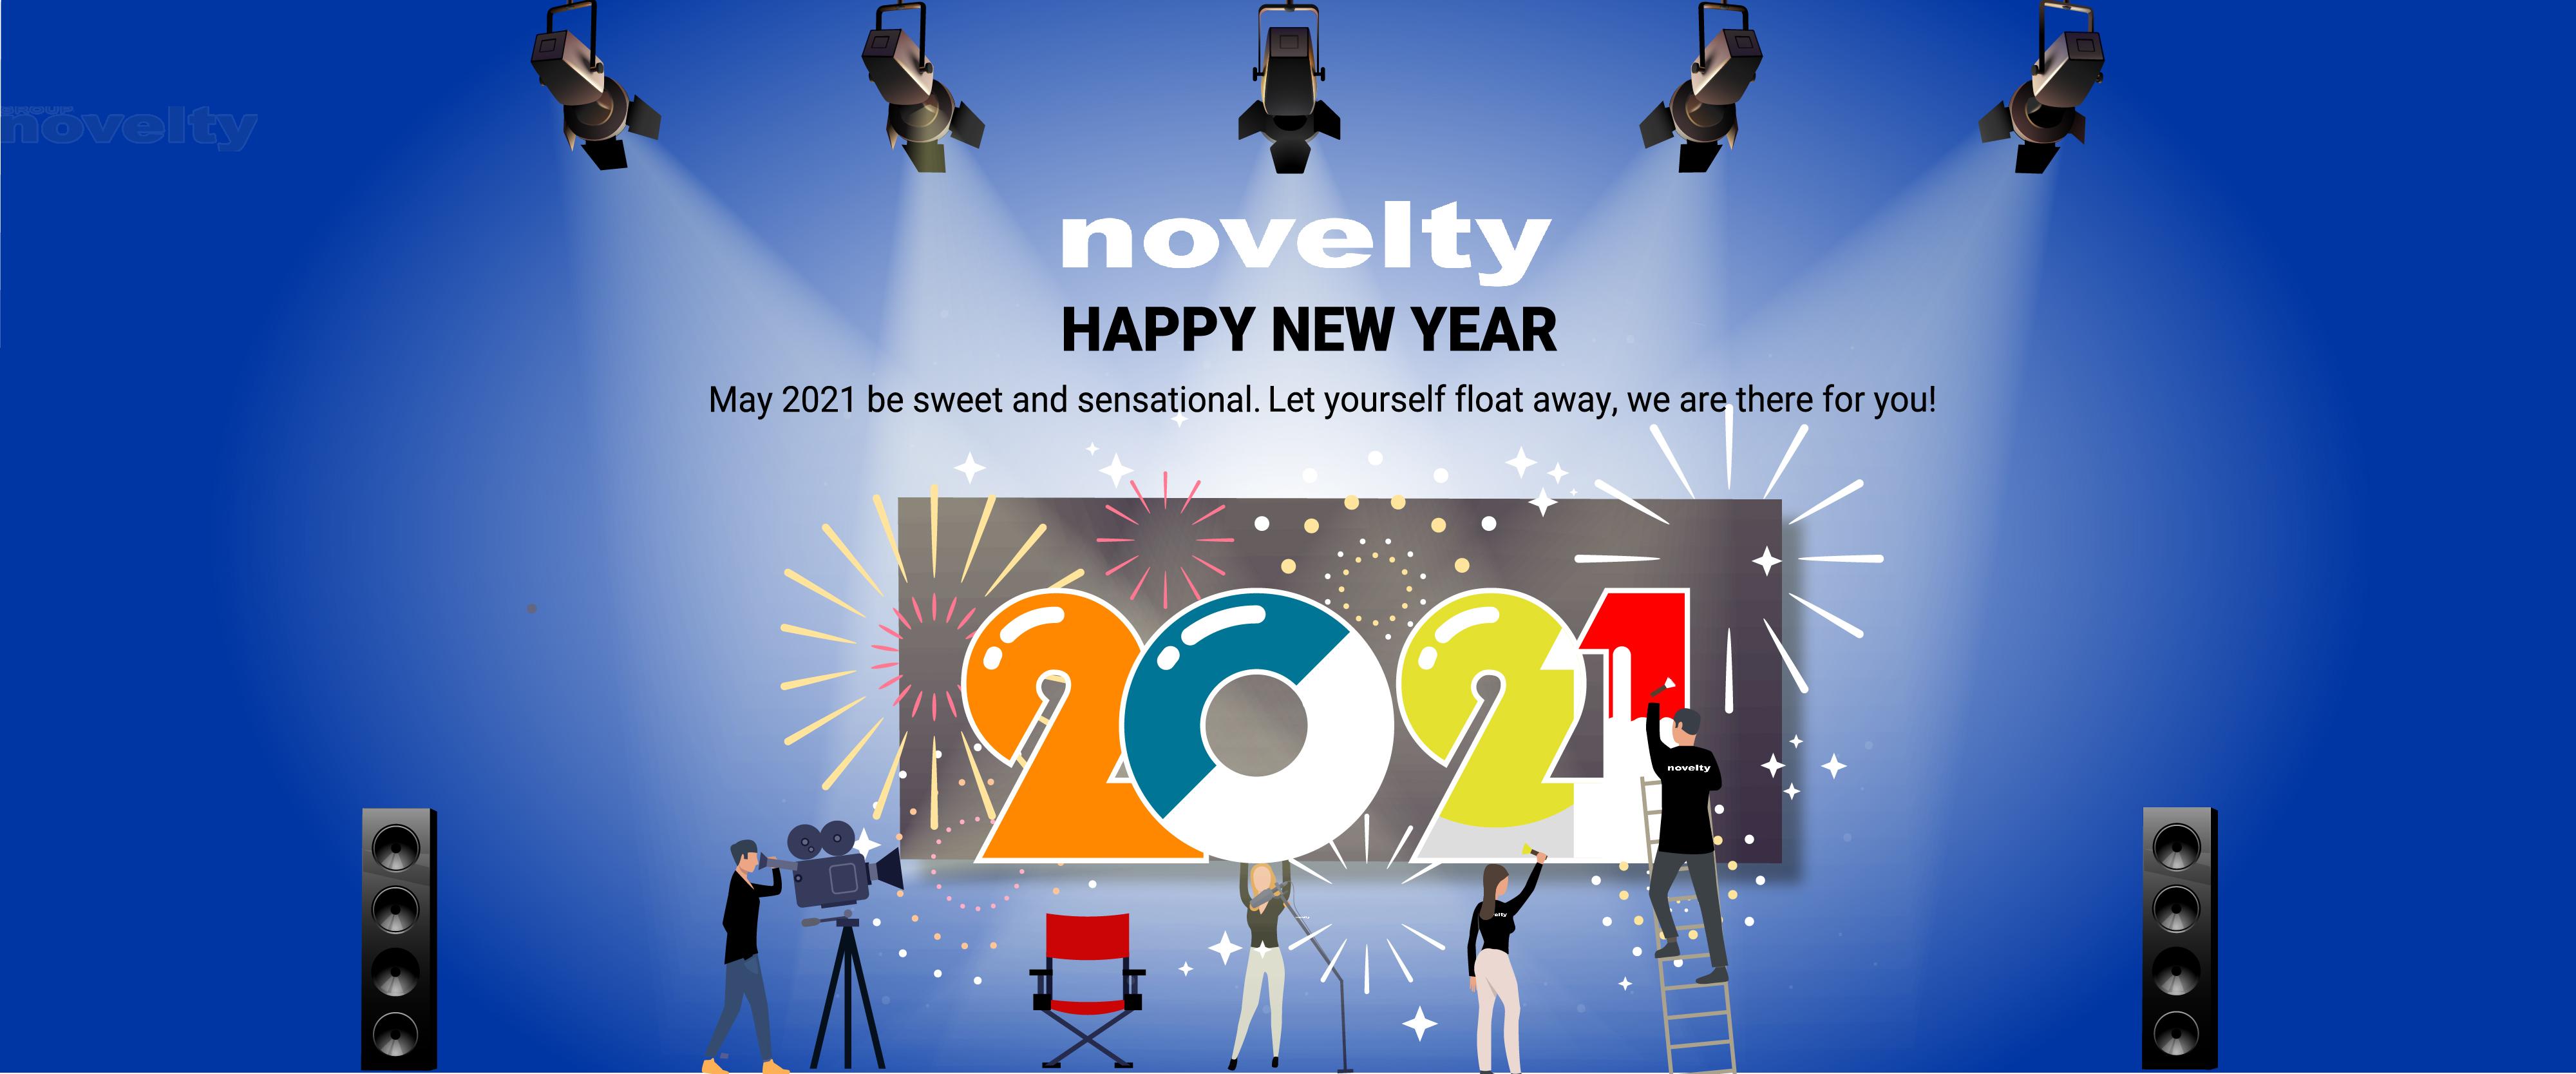 Visuel Happy New Year 2021 